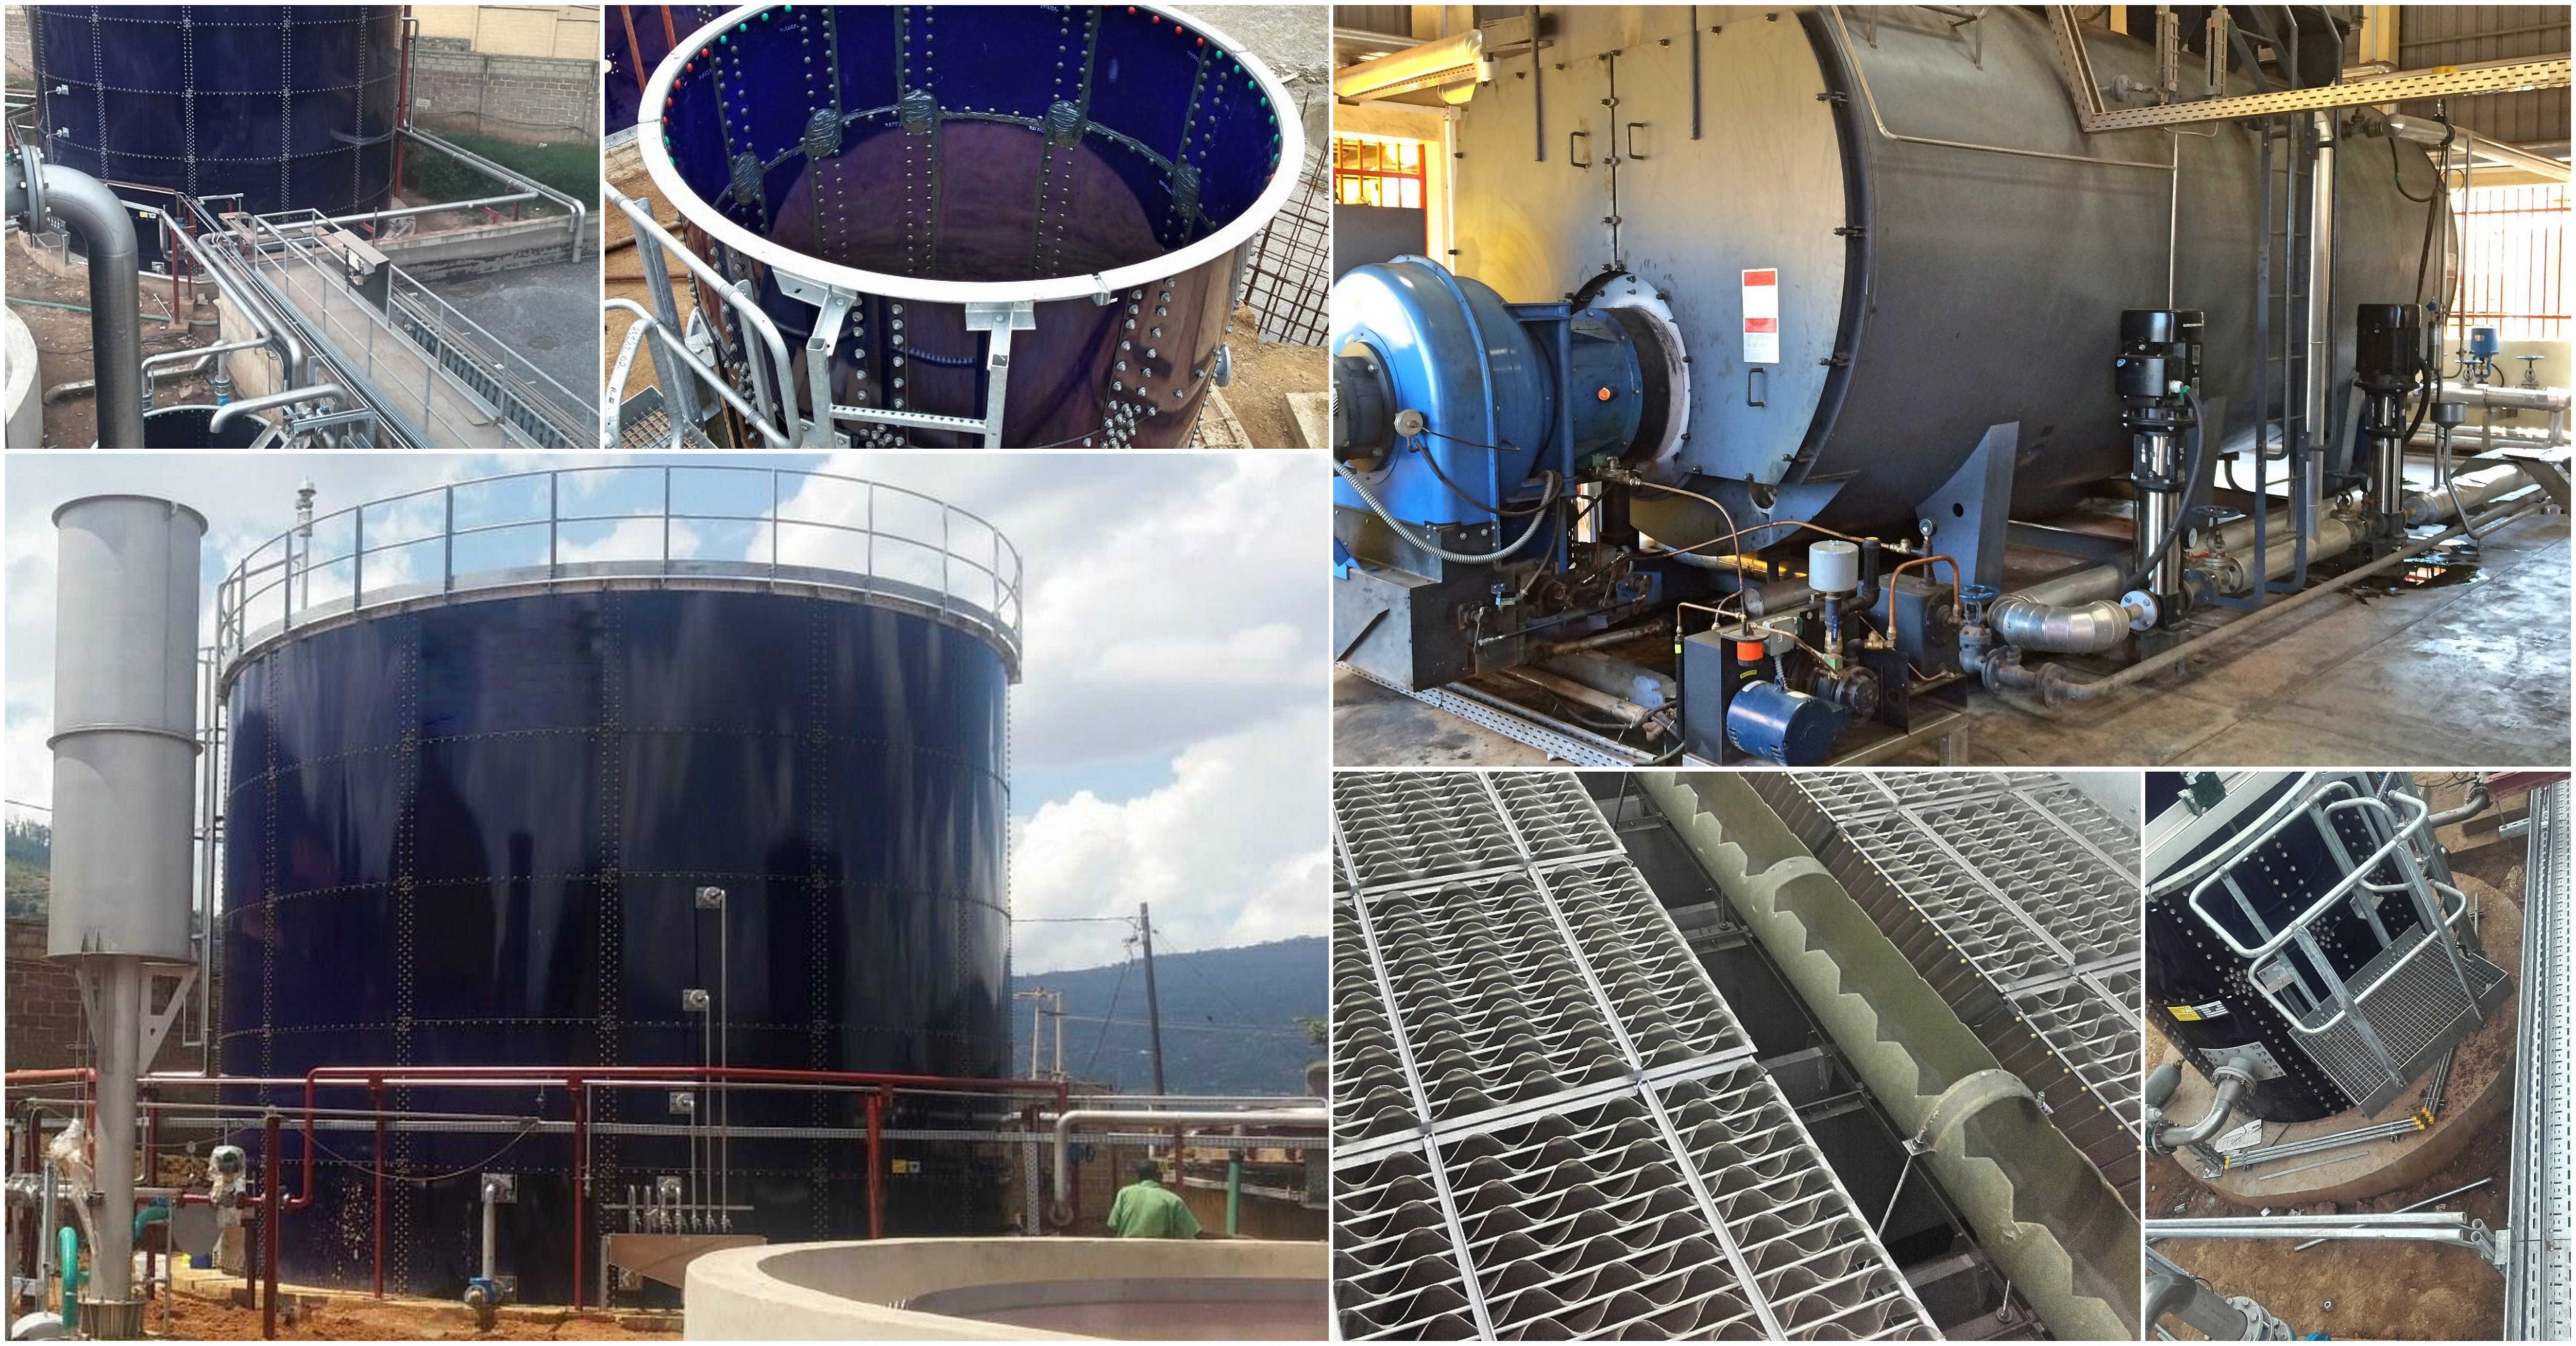 Skol Brewery Ltd Rwanda Uses Energy Produced From Wastewater to Heat Boilers